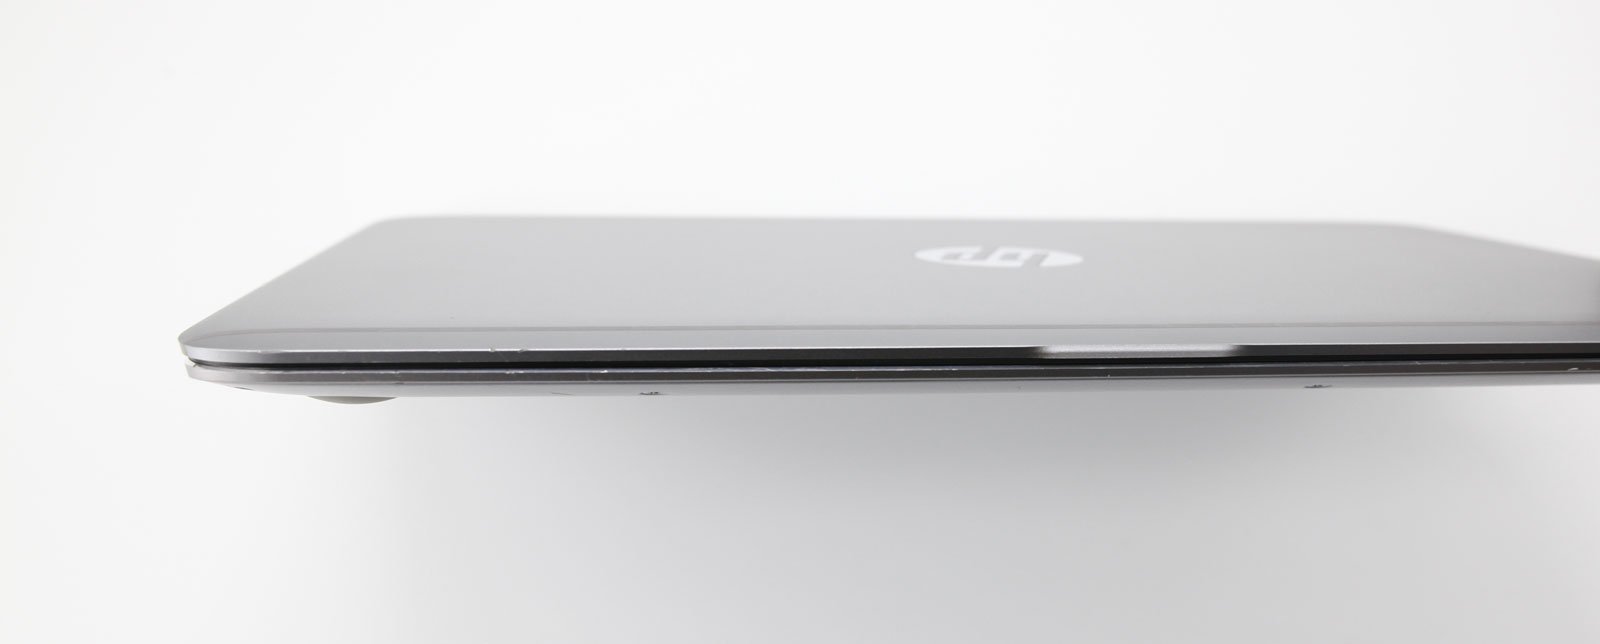 HP EliteBook 1040 G3 QHD Touch laptop: i5-6300U, 8GB RAM, 360GB SSD, Warranty - CruiseTech